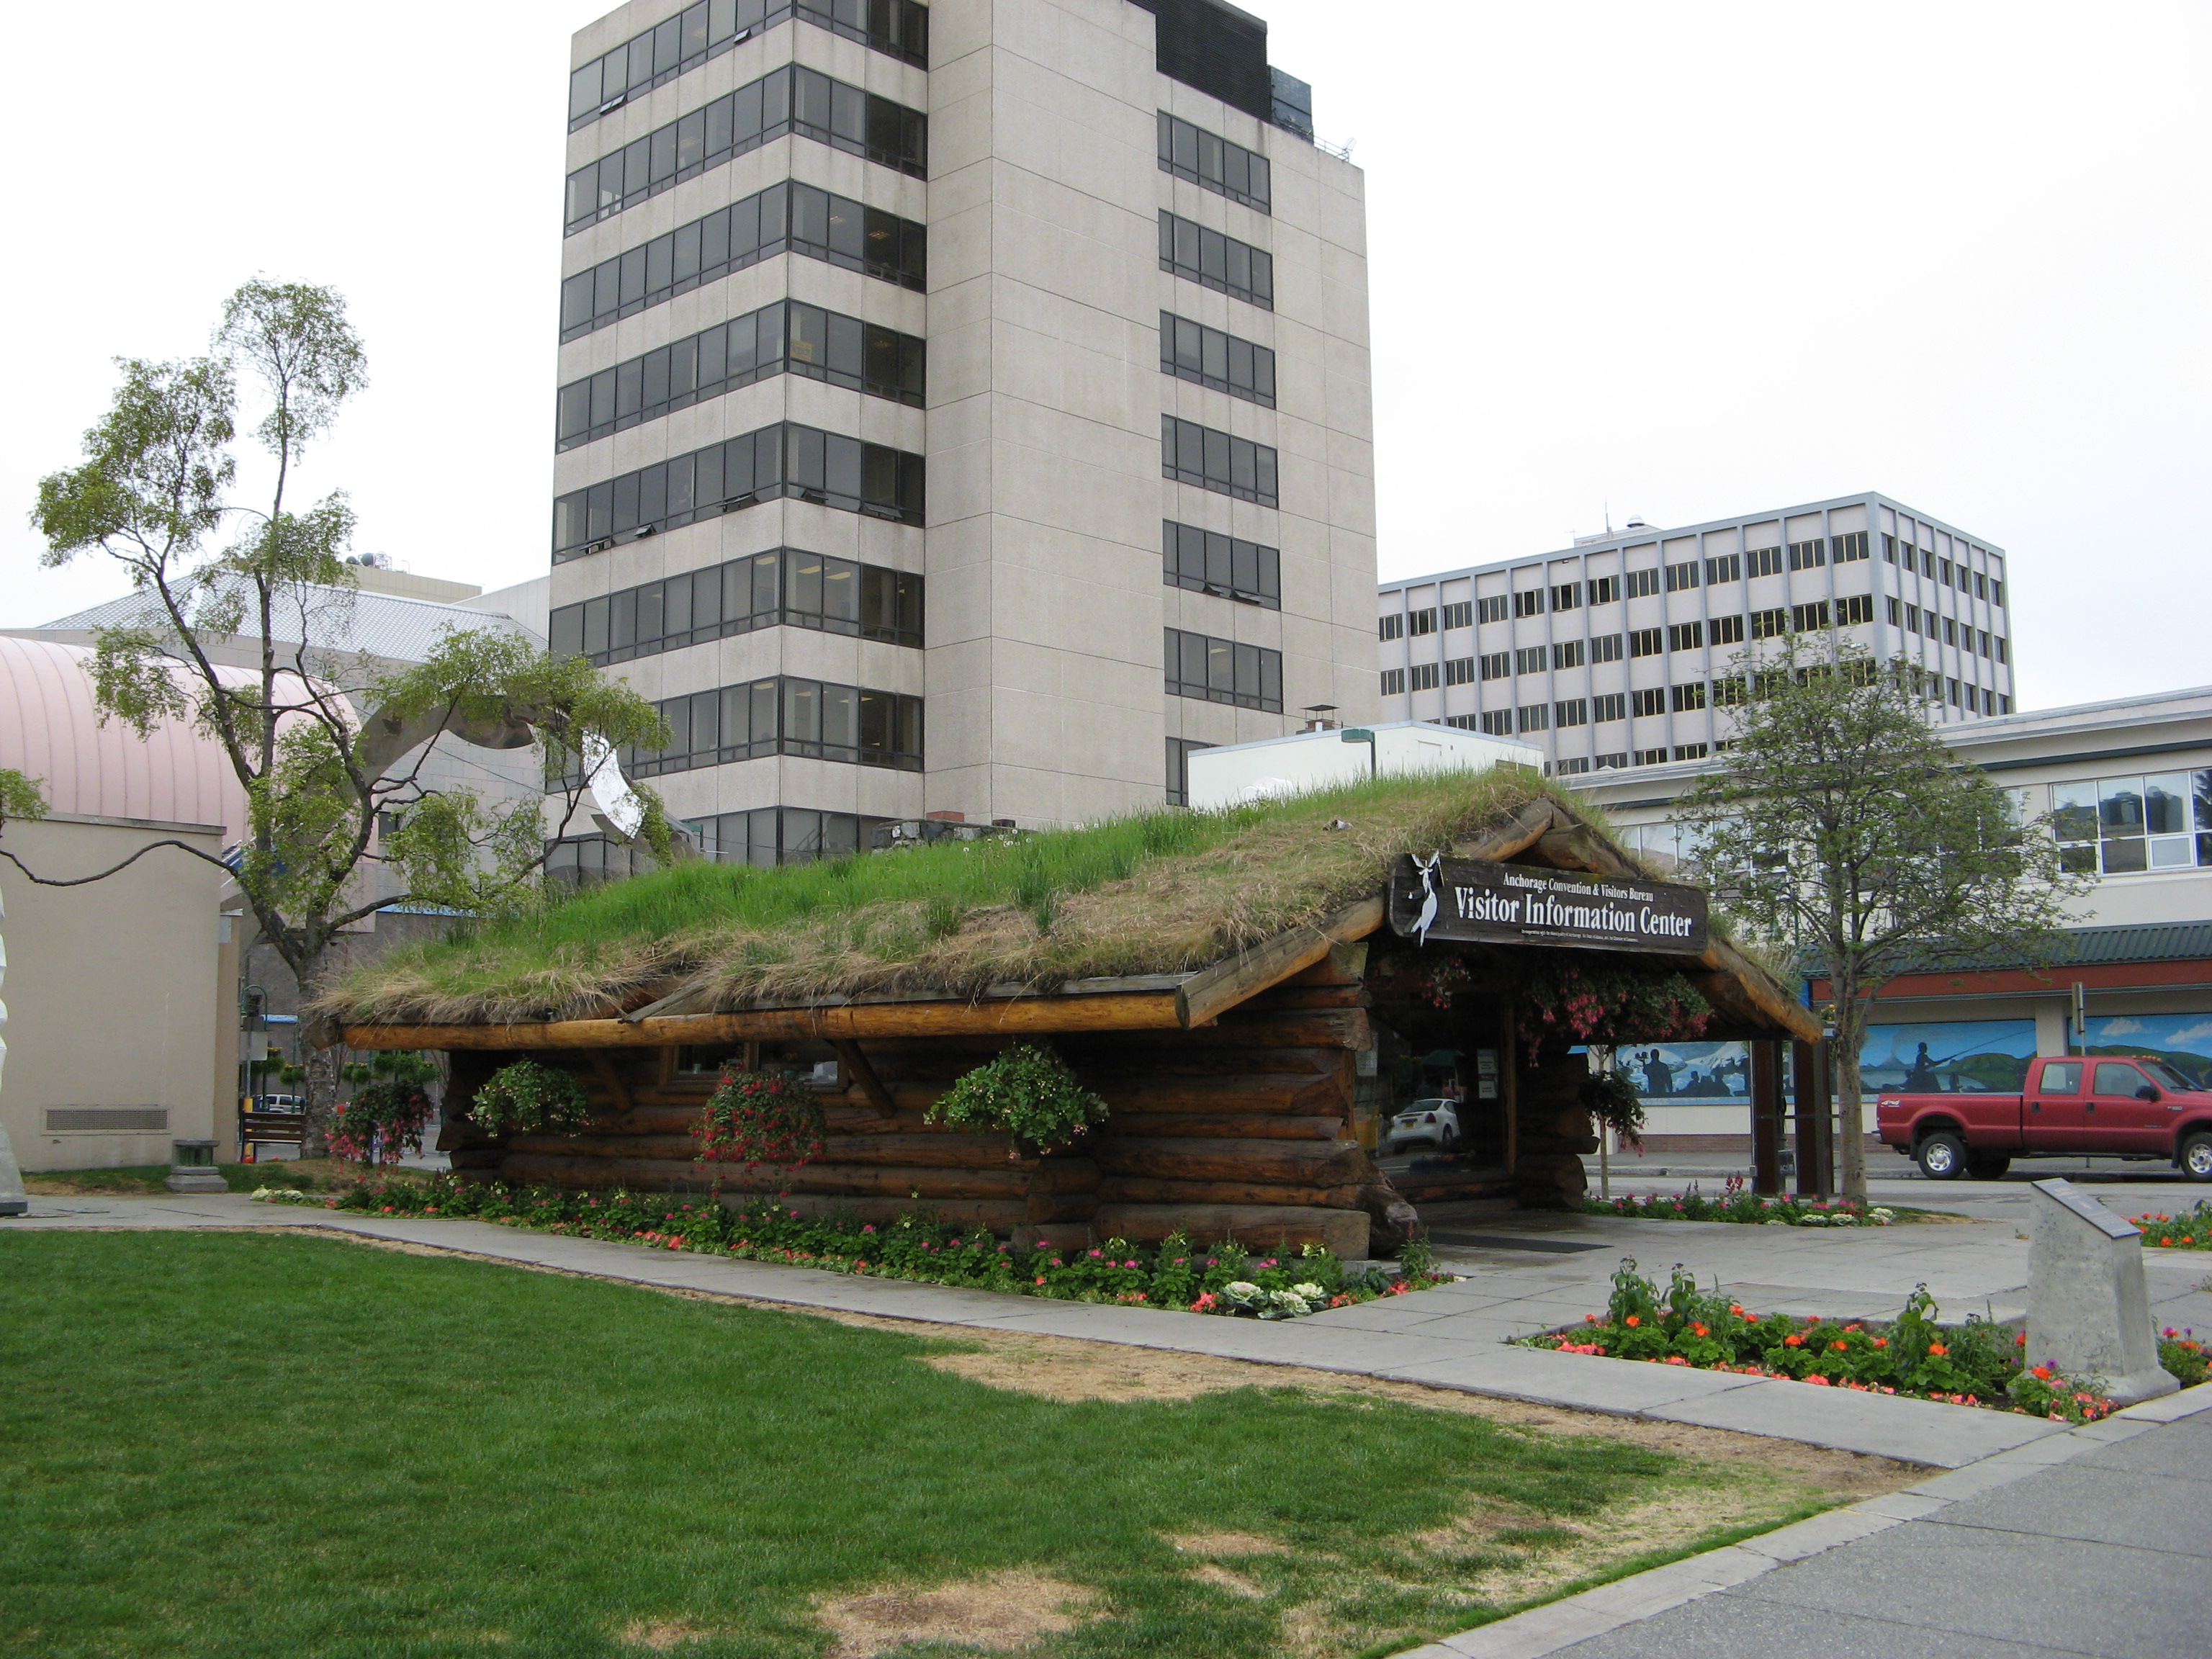 Anchorage, Alaska visitor's information center (grass roof).